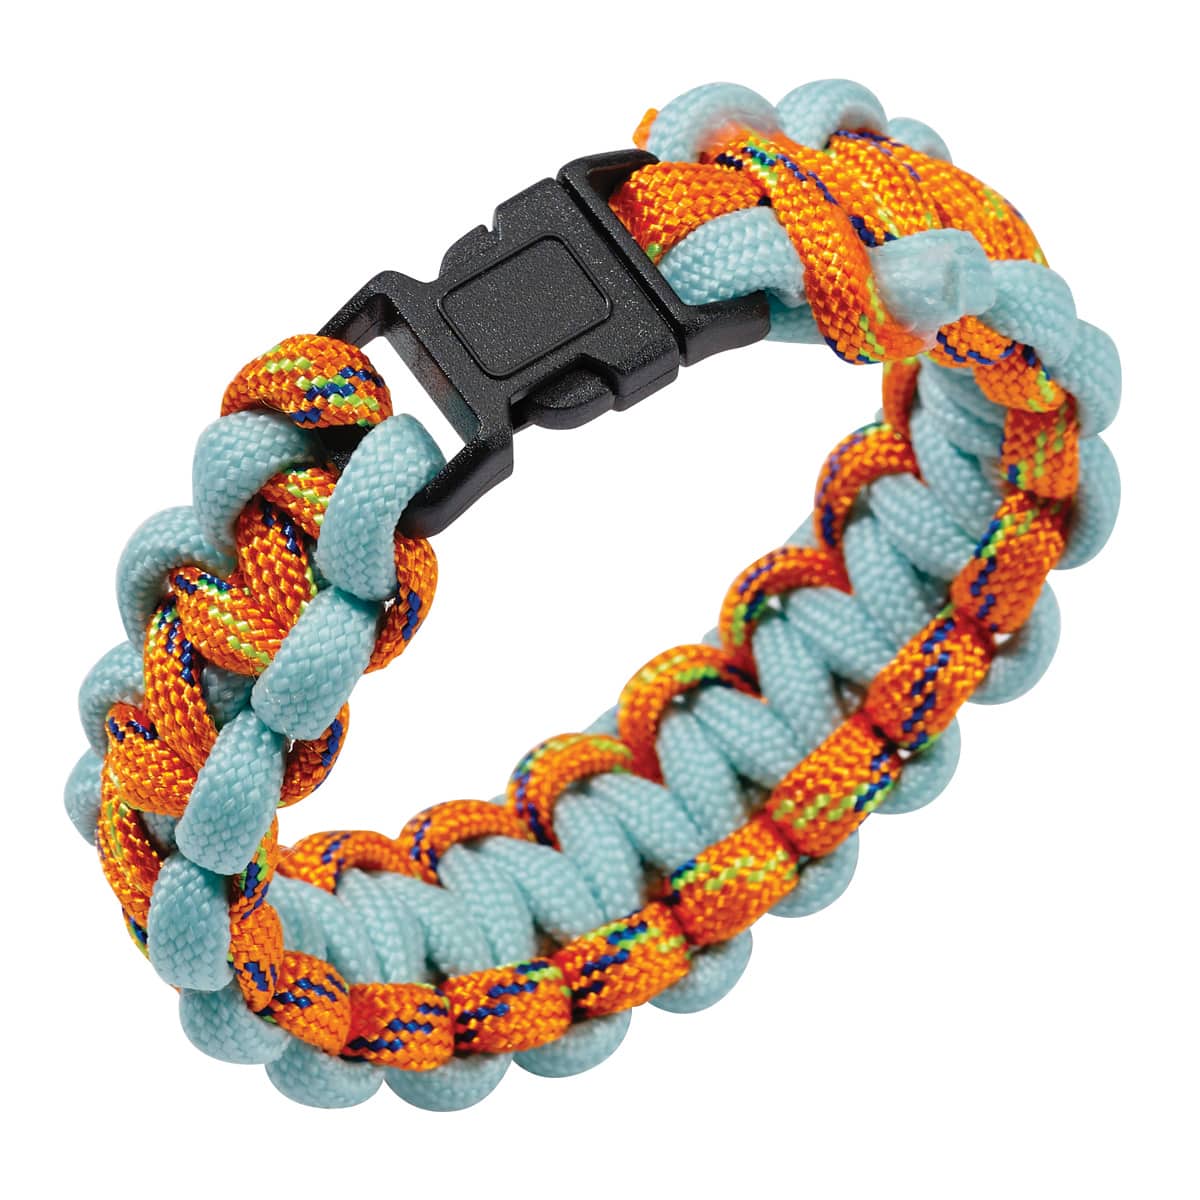 Craft County Rainbow Paracord Bracelet Kit DIY Project - 10 Feet